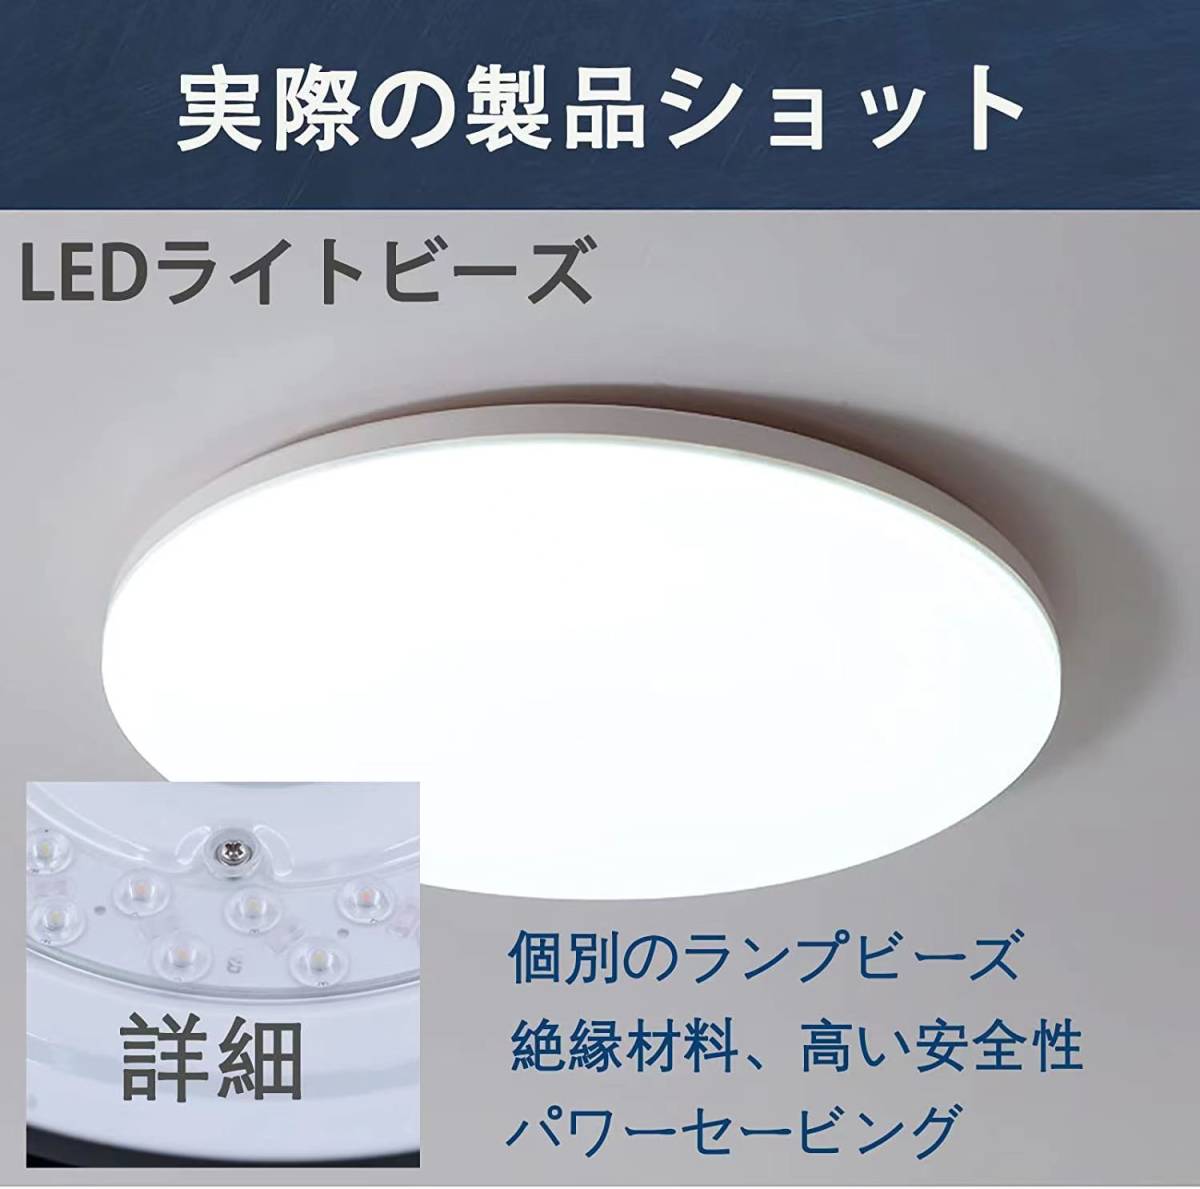 LEDシーリングライト6-8畳 最大電力 約28W 無段階調光調色 電球色 昼白色 3080lm 長夜灯 節電リモコン付き_画像3